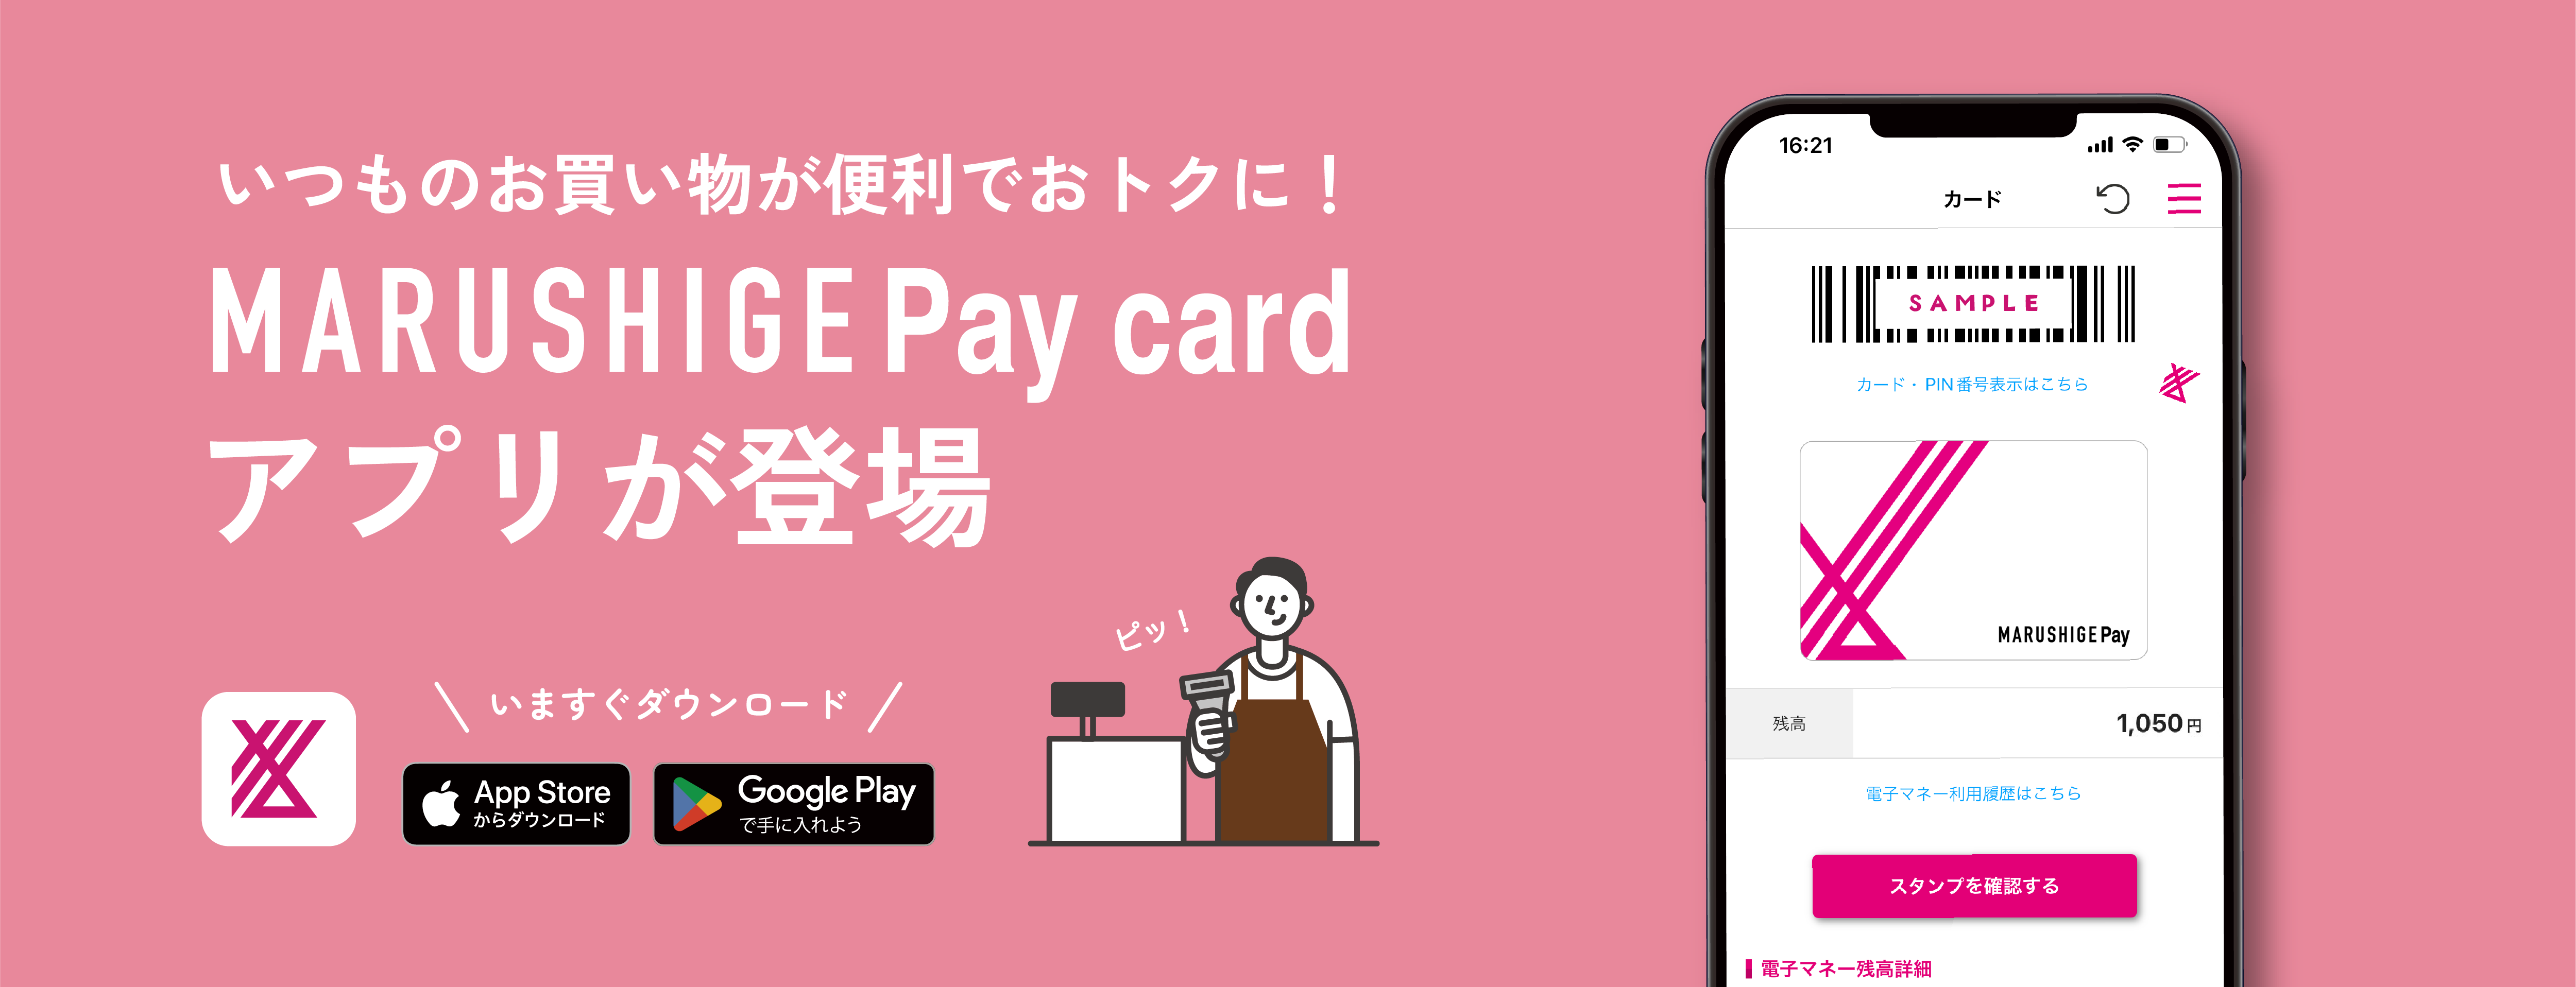 MARUSHIGE Pay cardにアプリが登場